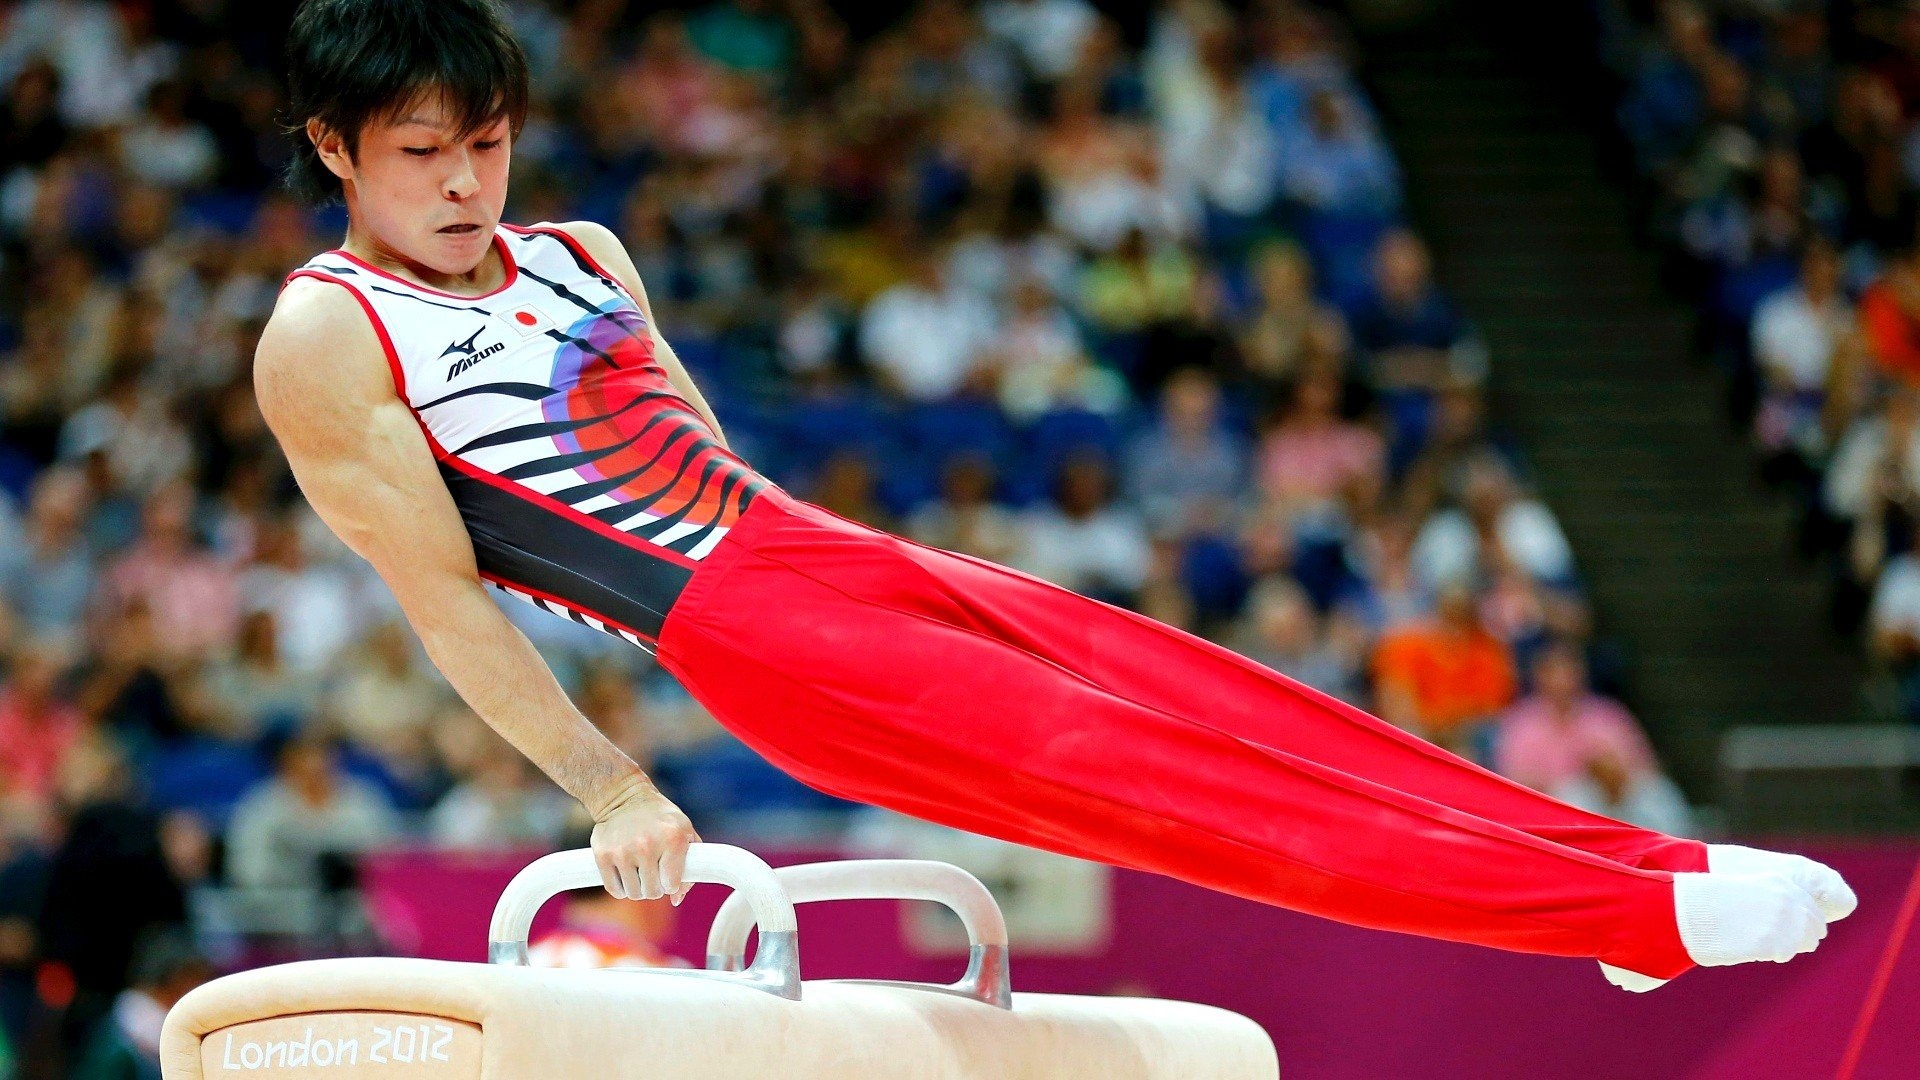 Acrobatic Gymnastics: Kohei Uchimura, A retired Japanese artistic gymnast, A seven-time Olympic medalist. 1920x1080 Full HD Wallpaper.